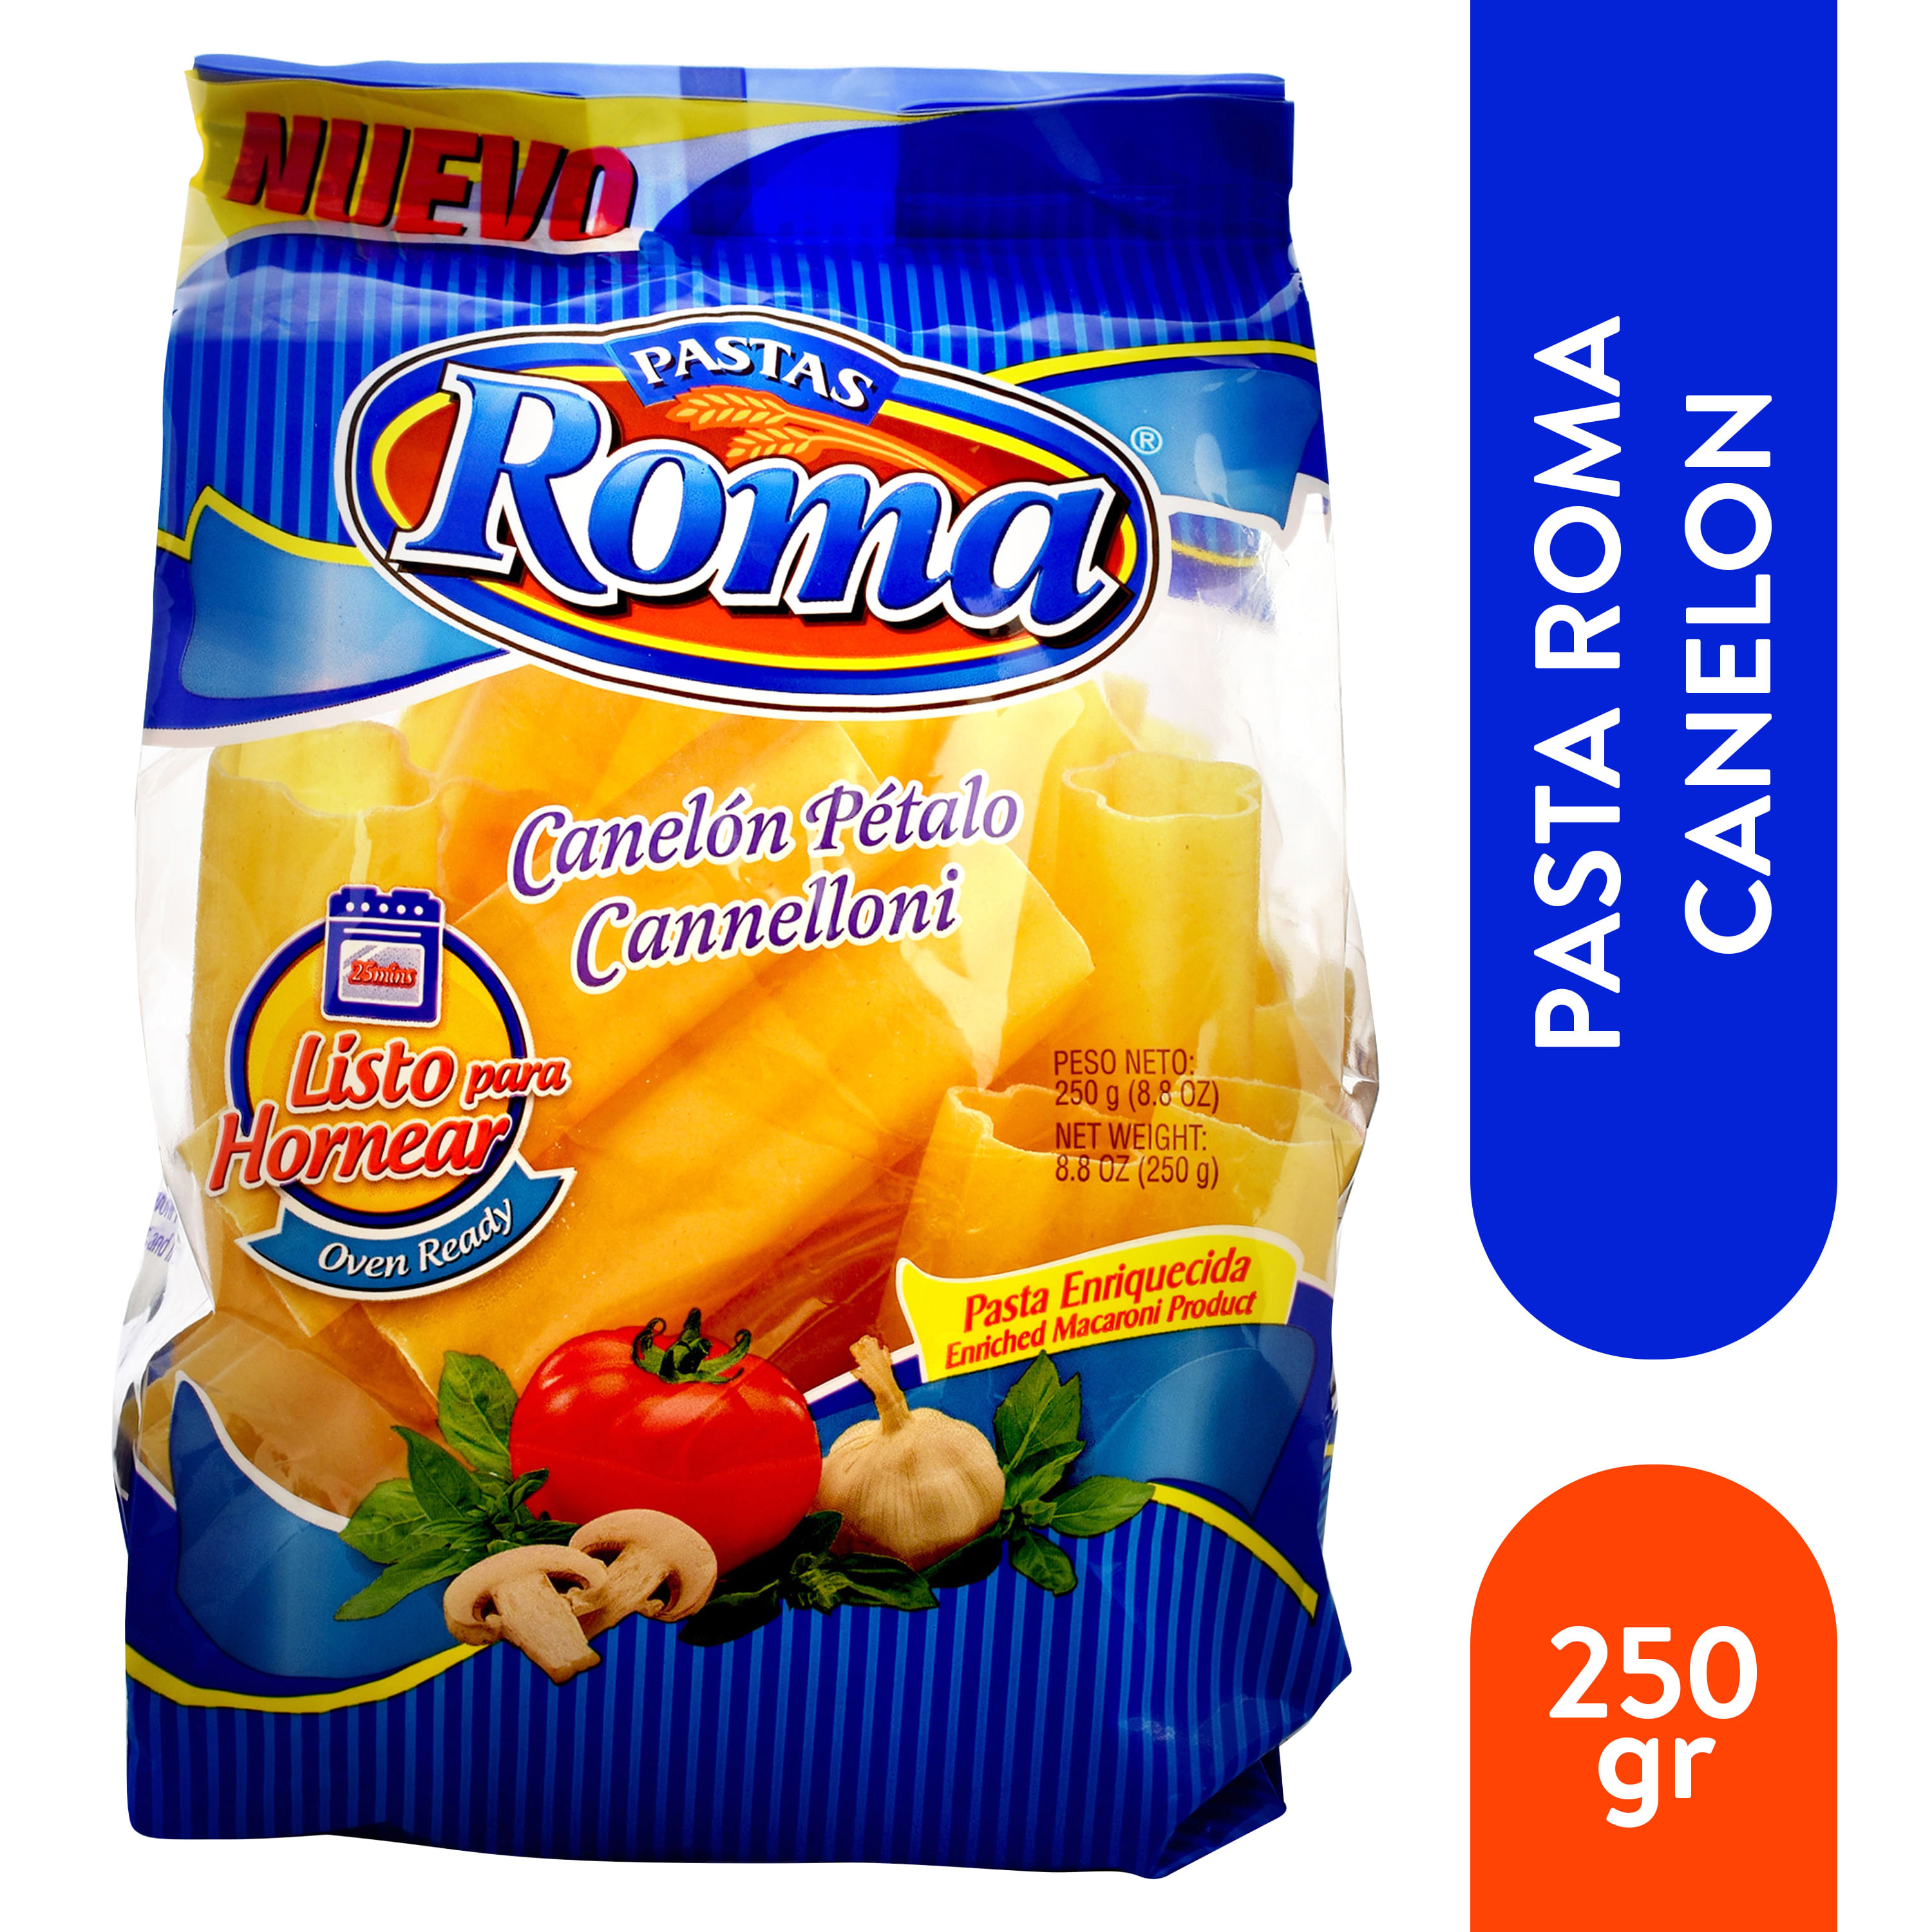 Pasta-Roma-Canelon-Petalo-250gr-1-27816